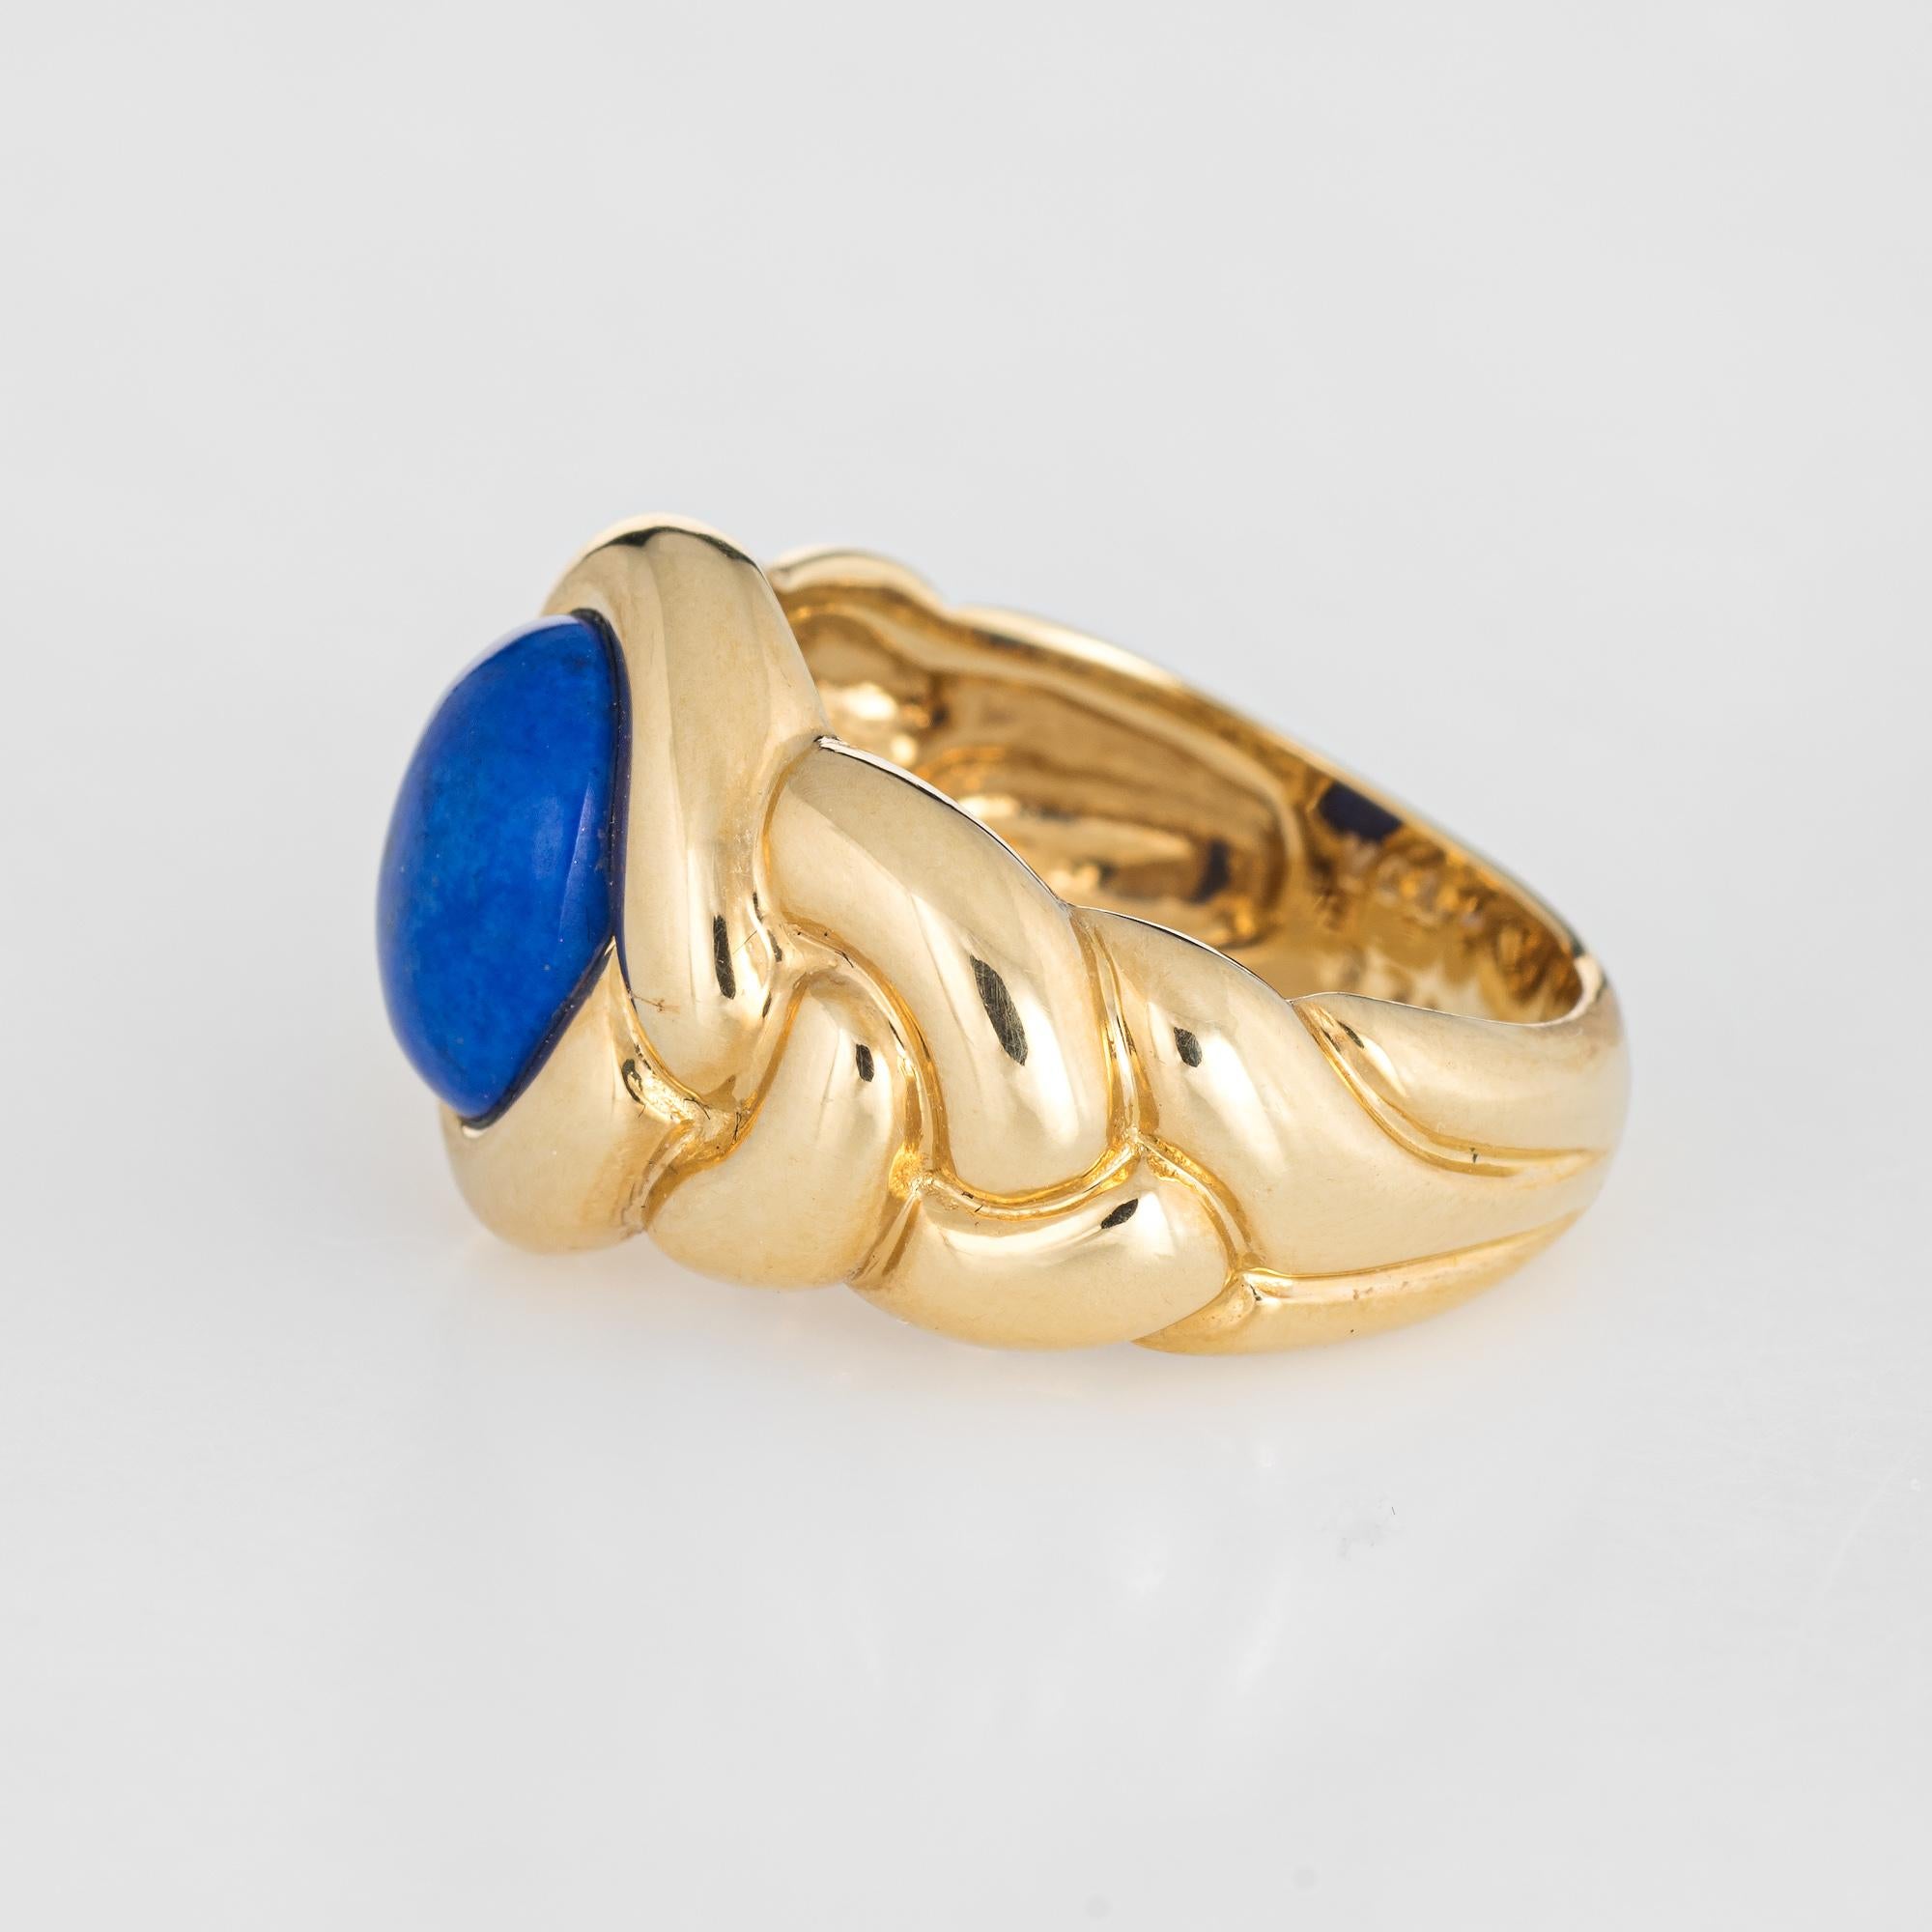 Oval Cut Van Cleef & Arpels Lapis Lazuli Ring Vintage 18 Karat Gold Fine Designer Jewelry